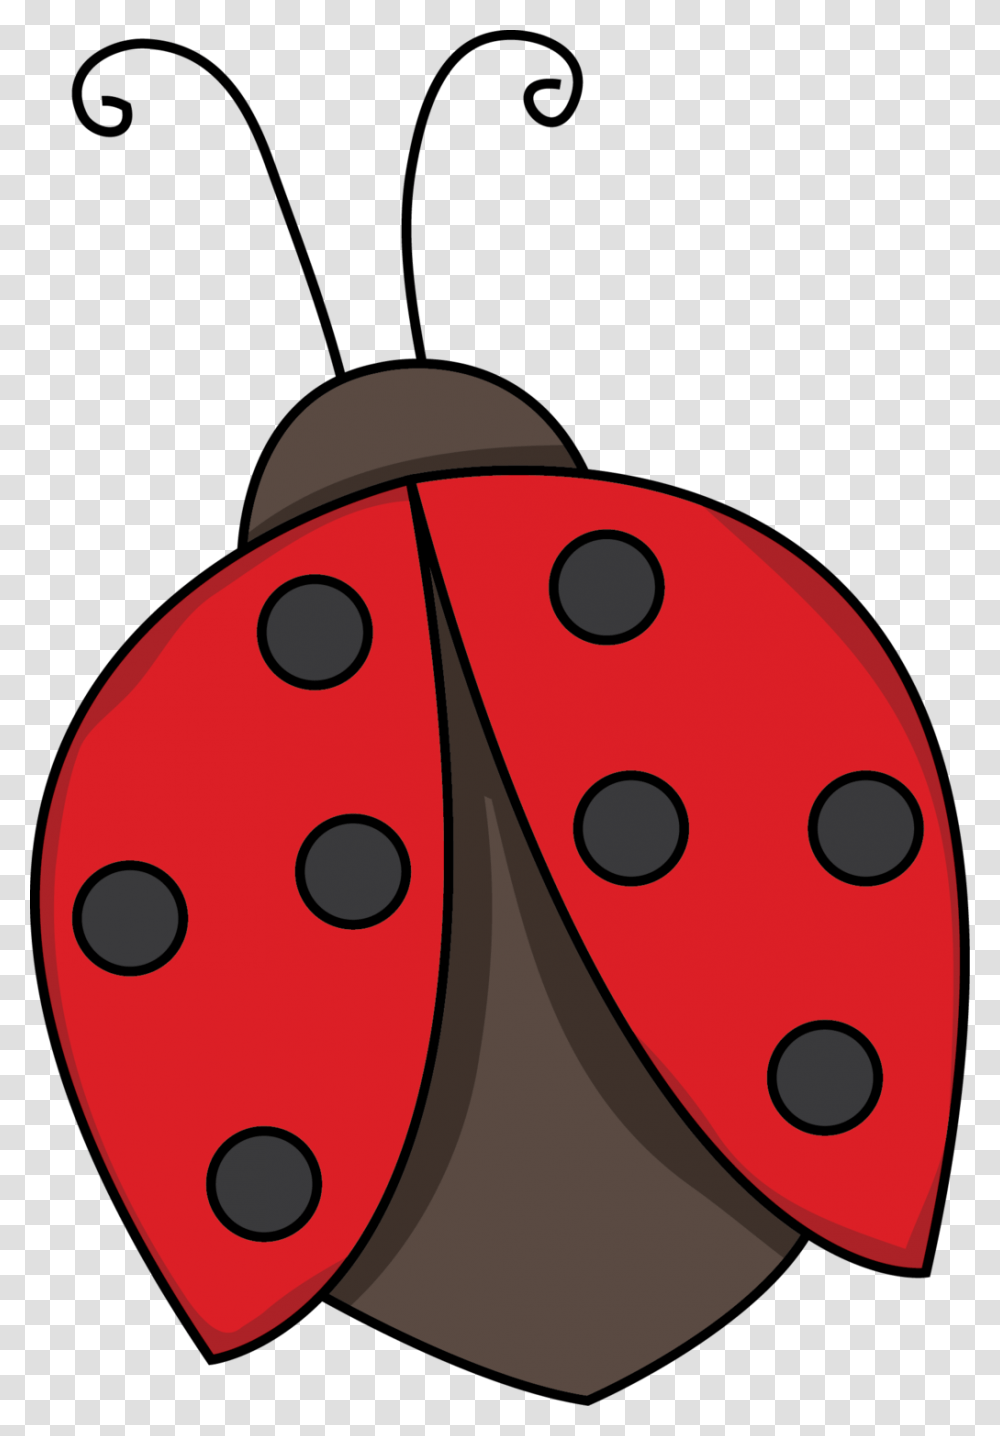 Ladybug png images for free download – Pngset.com In Blank Ladybug Template